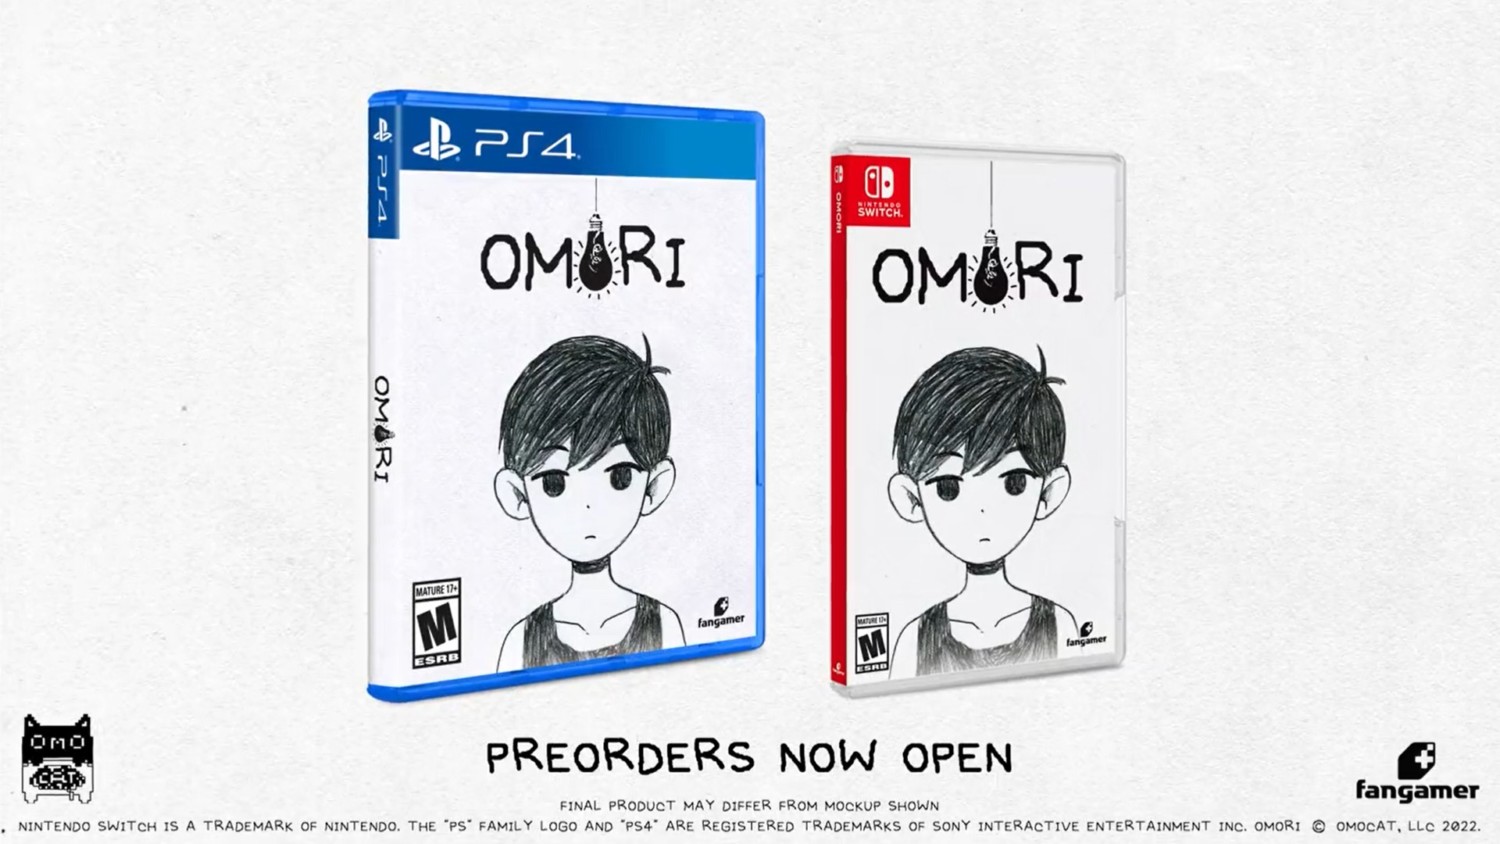 OMORI - OMORI is coming to Nintendo Switch in spring 2022.